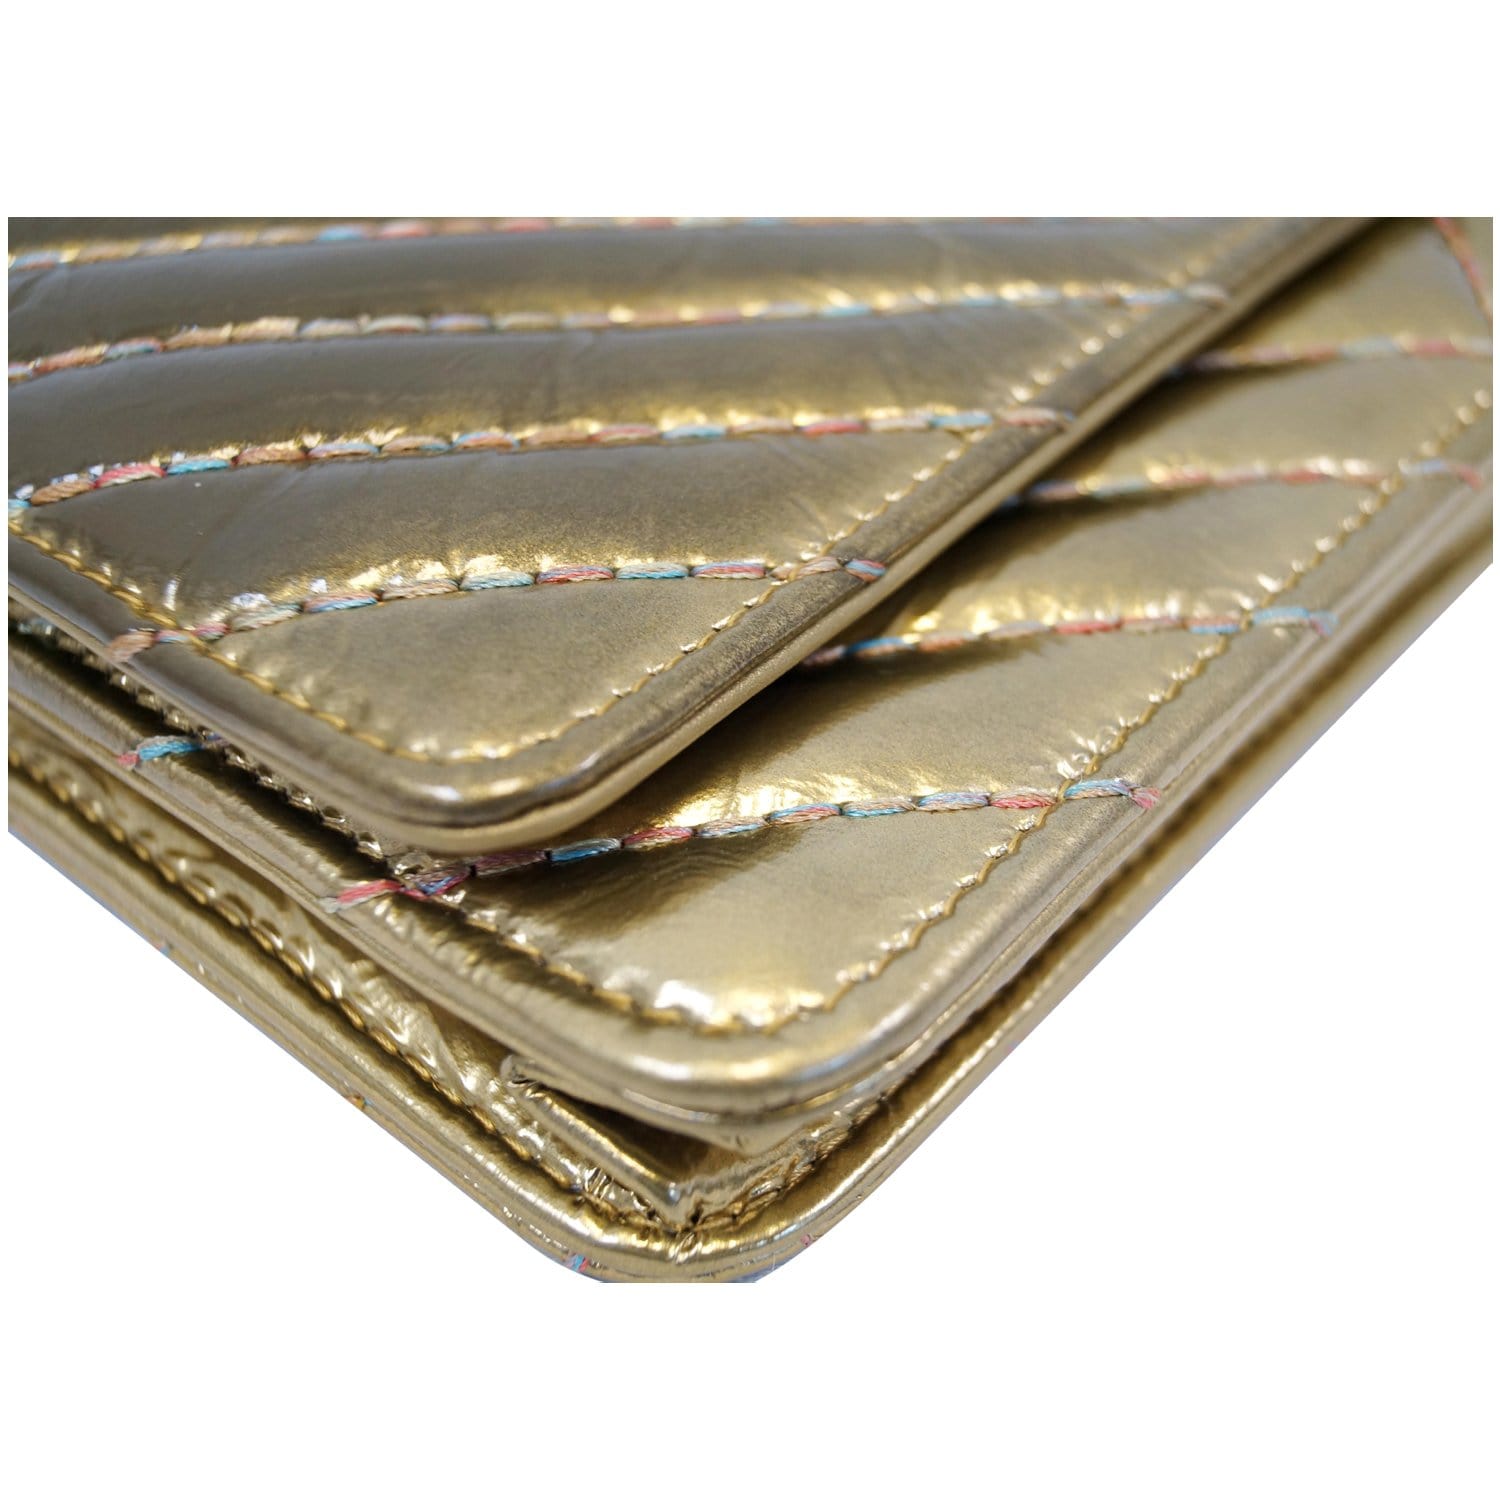 CHANEL Wallet on Chain WOC Metallic Leather Crossbody Bag Gold-US